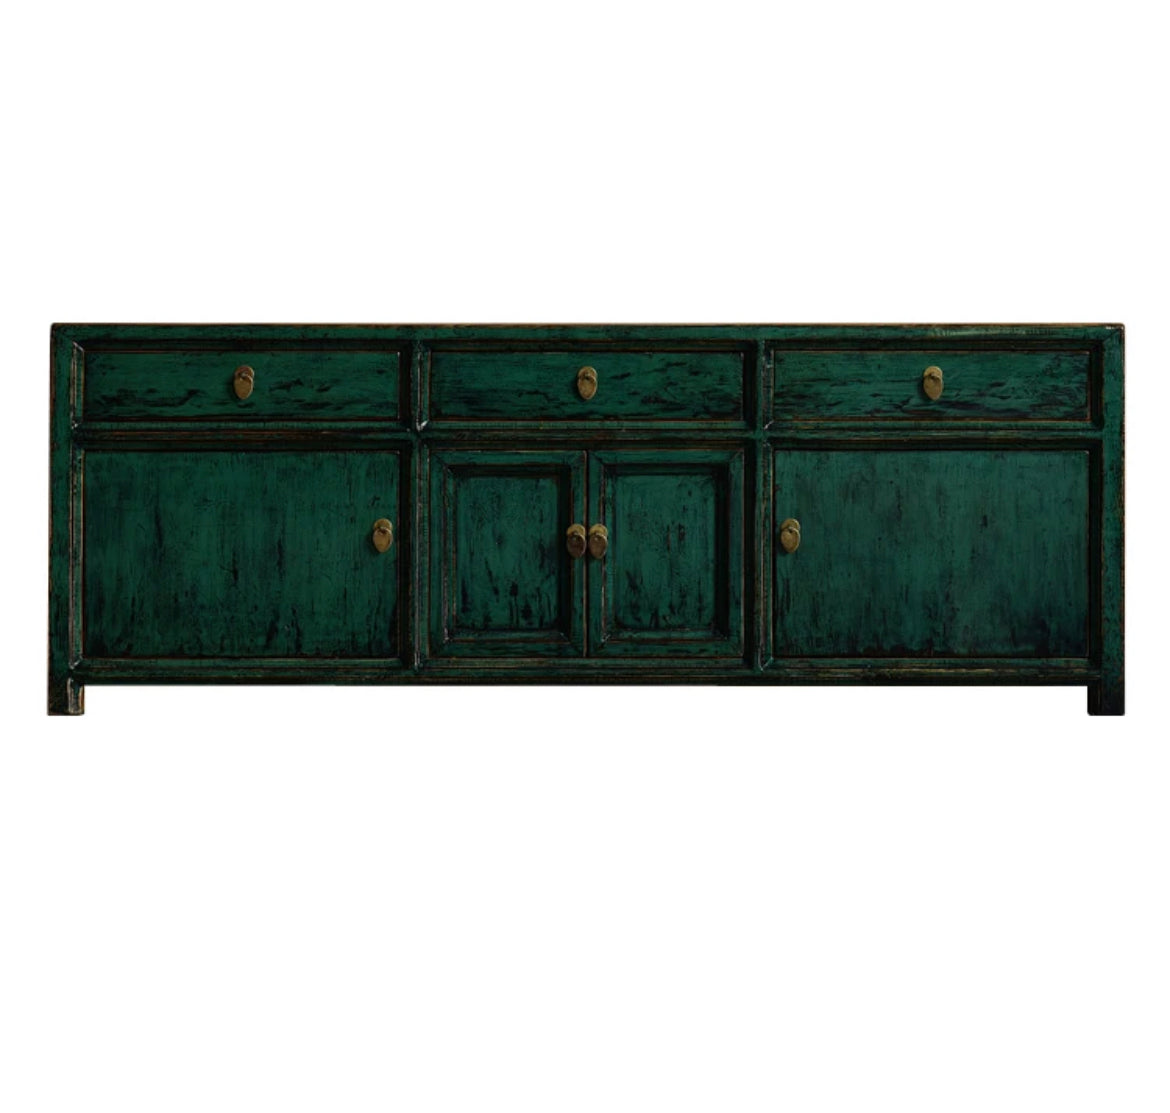 Italian Antique Solid Wood Cabinet Home Hotel Office Furniture Designer Side Cabinets